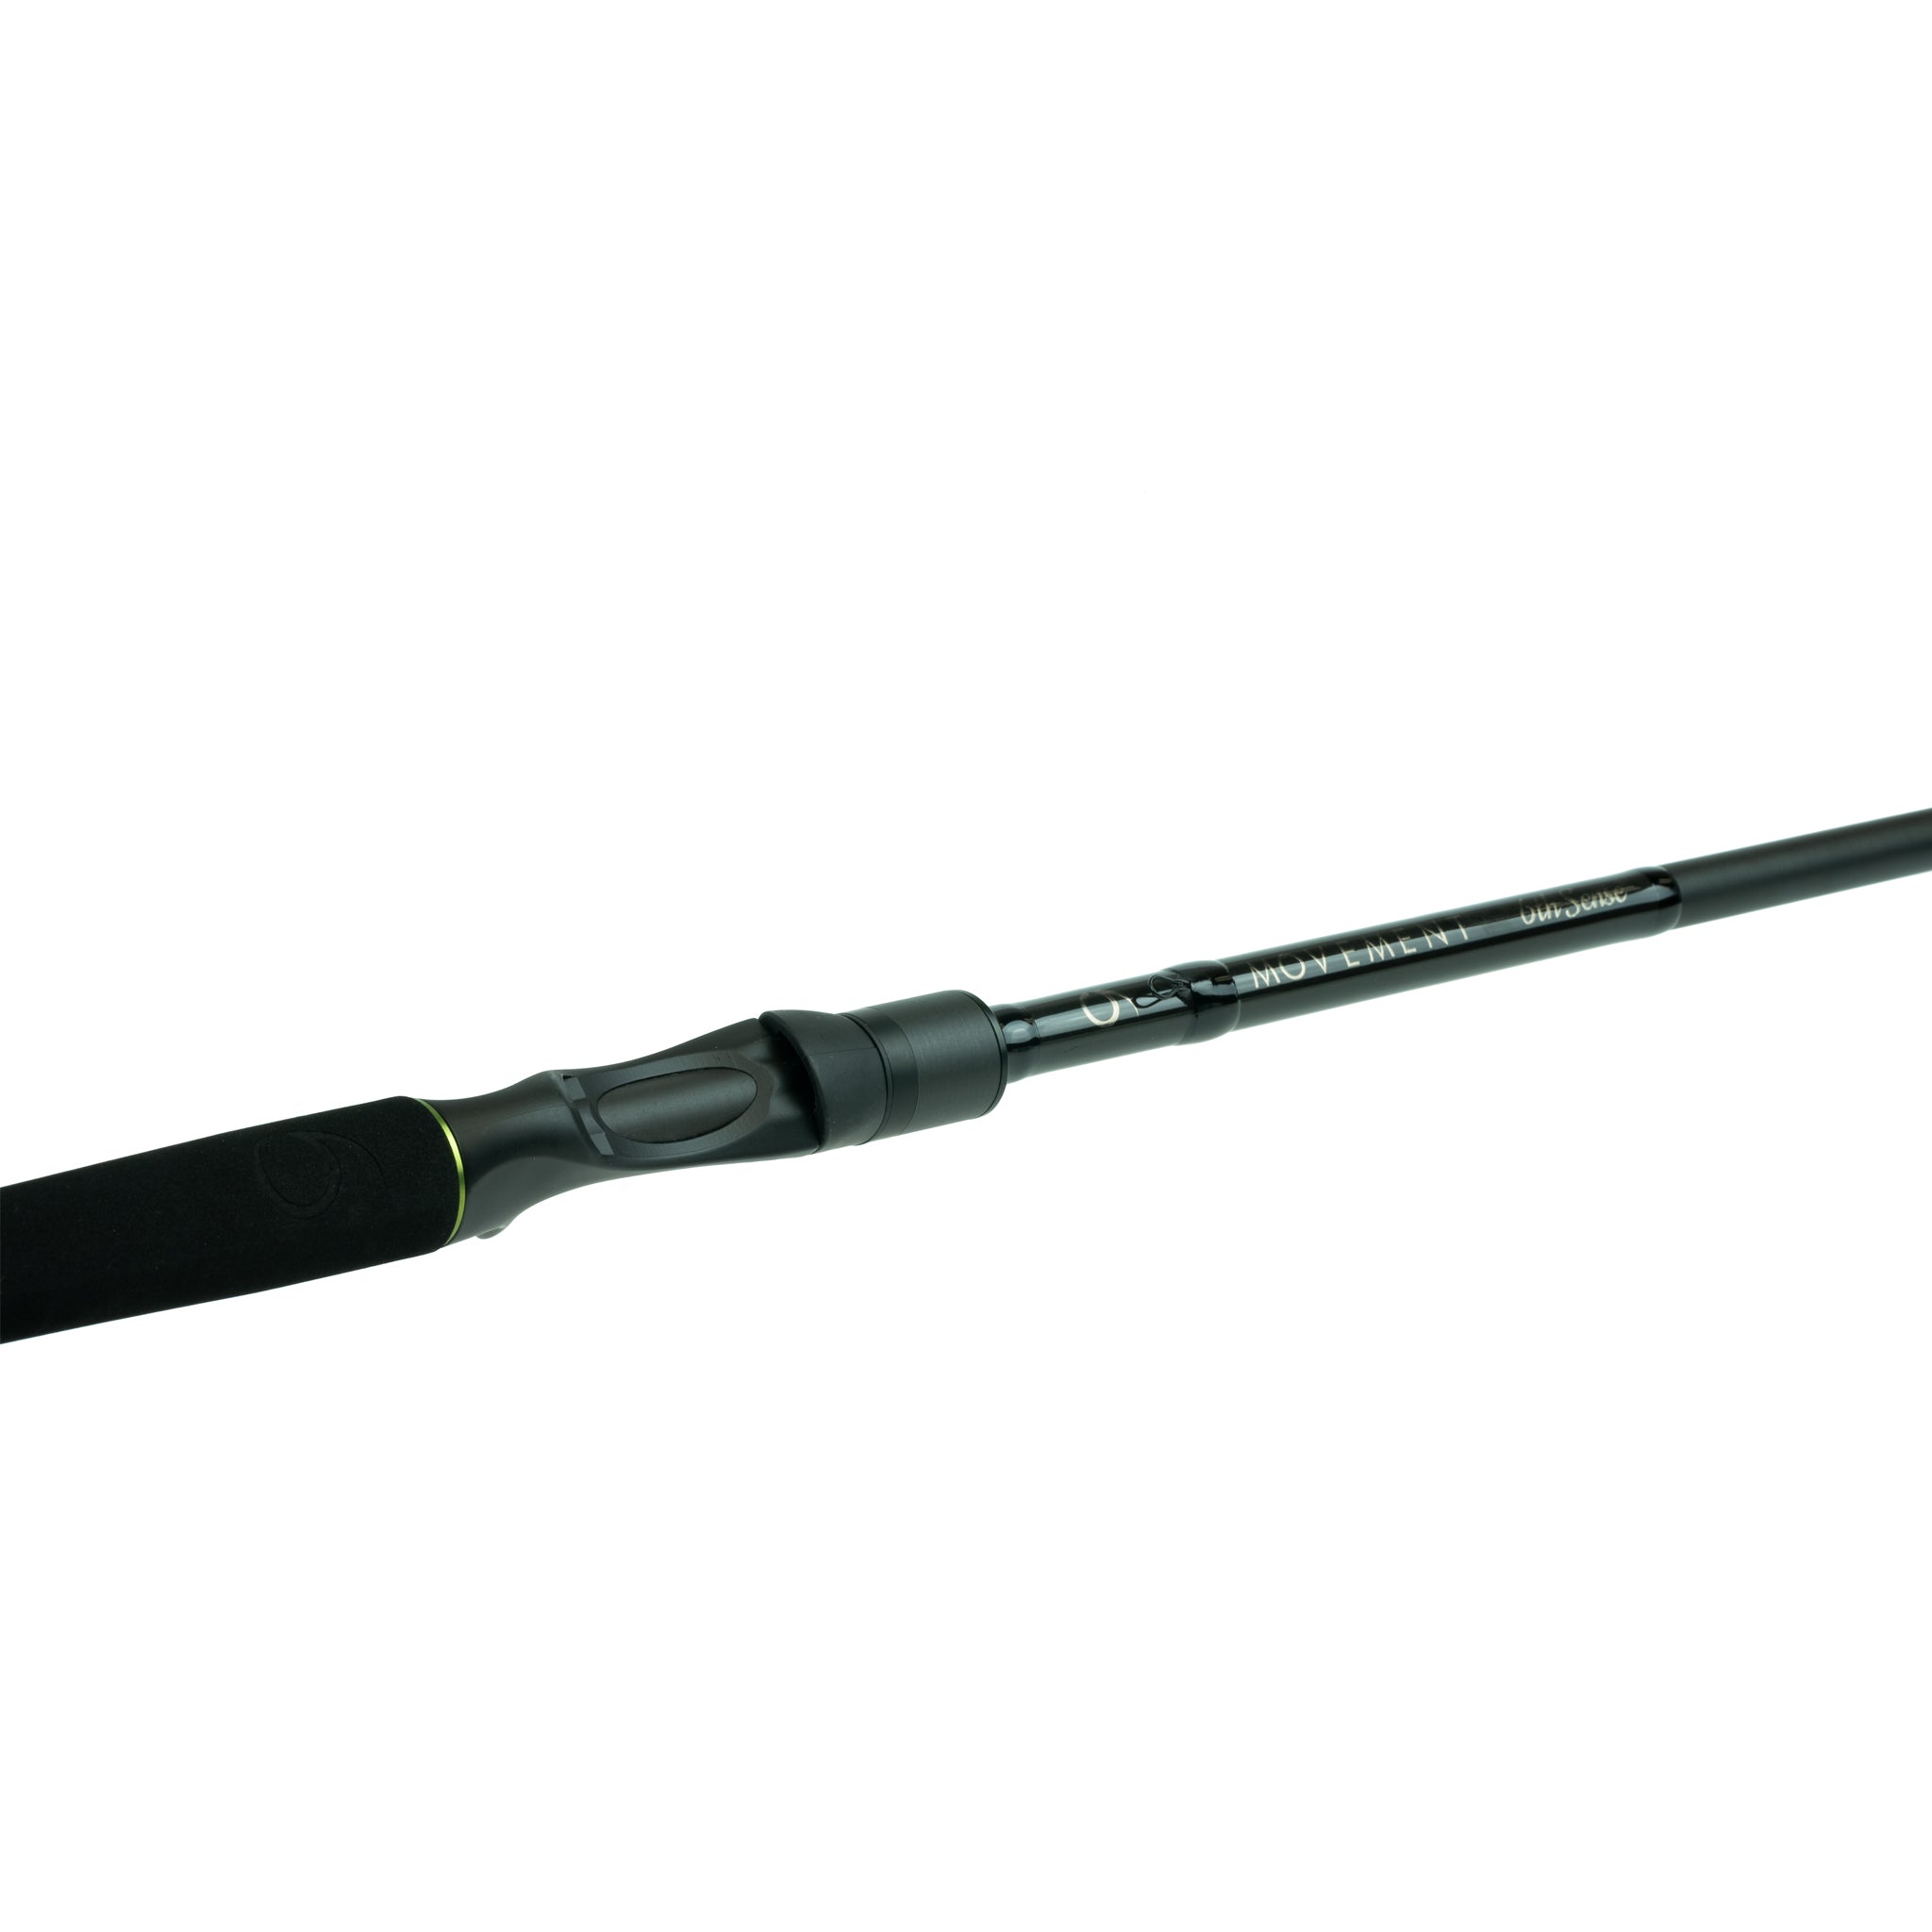 6th Sense Sweep 6 inch – Master Angler